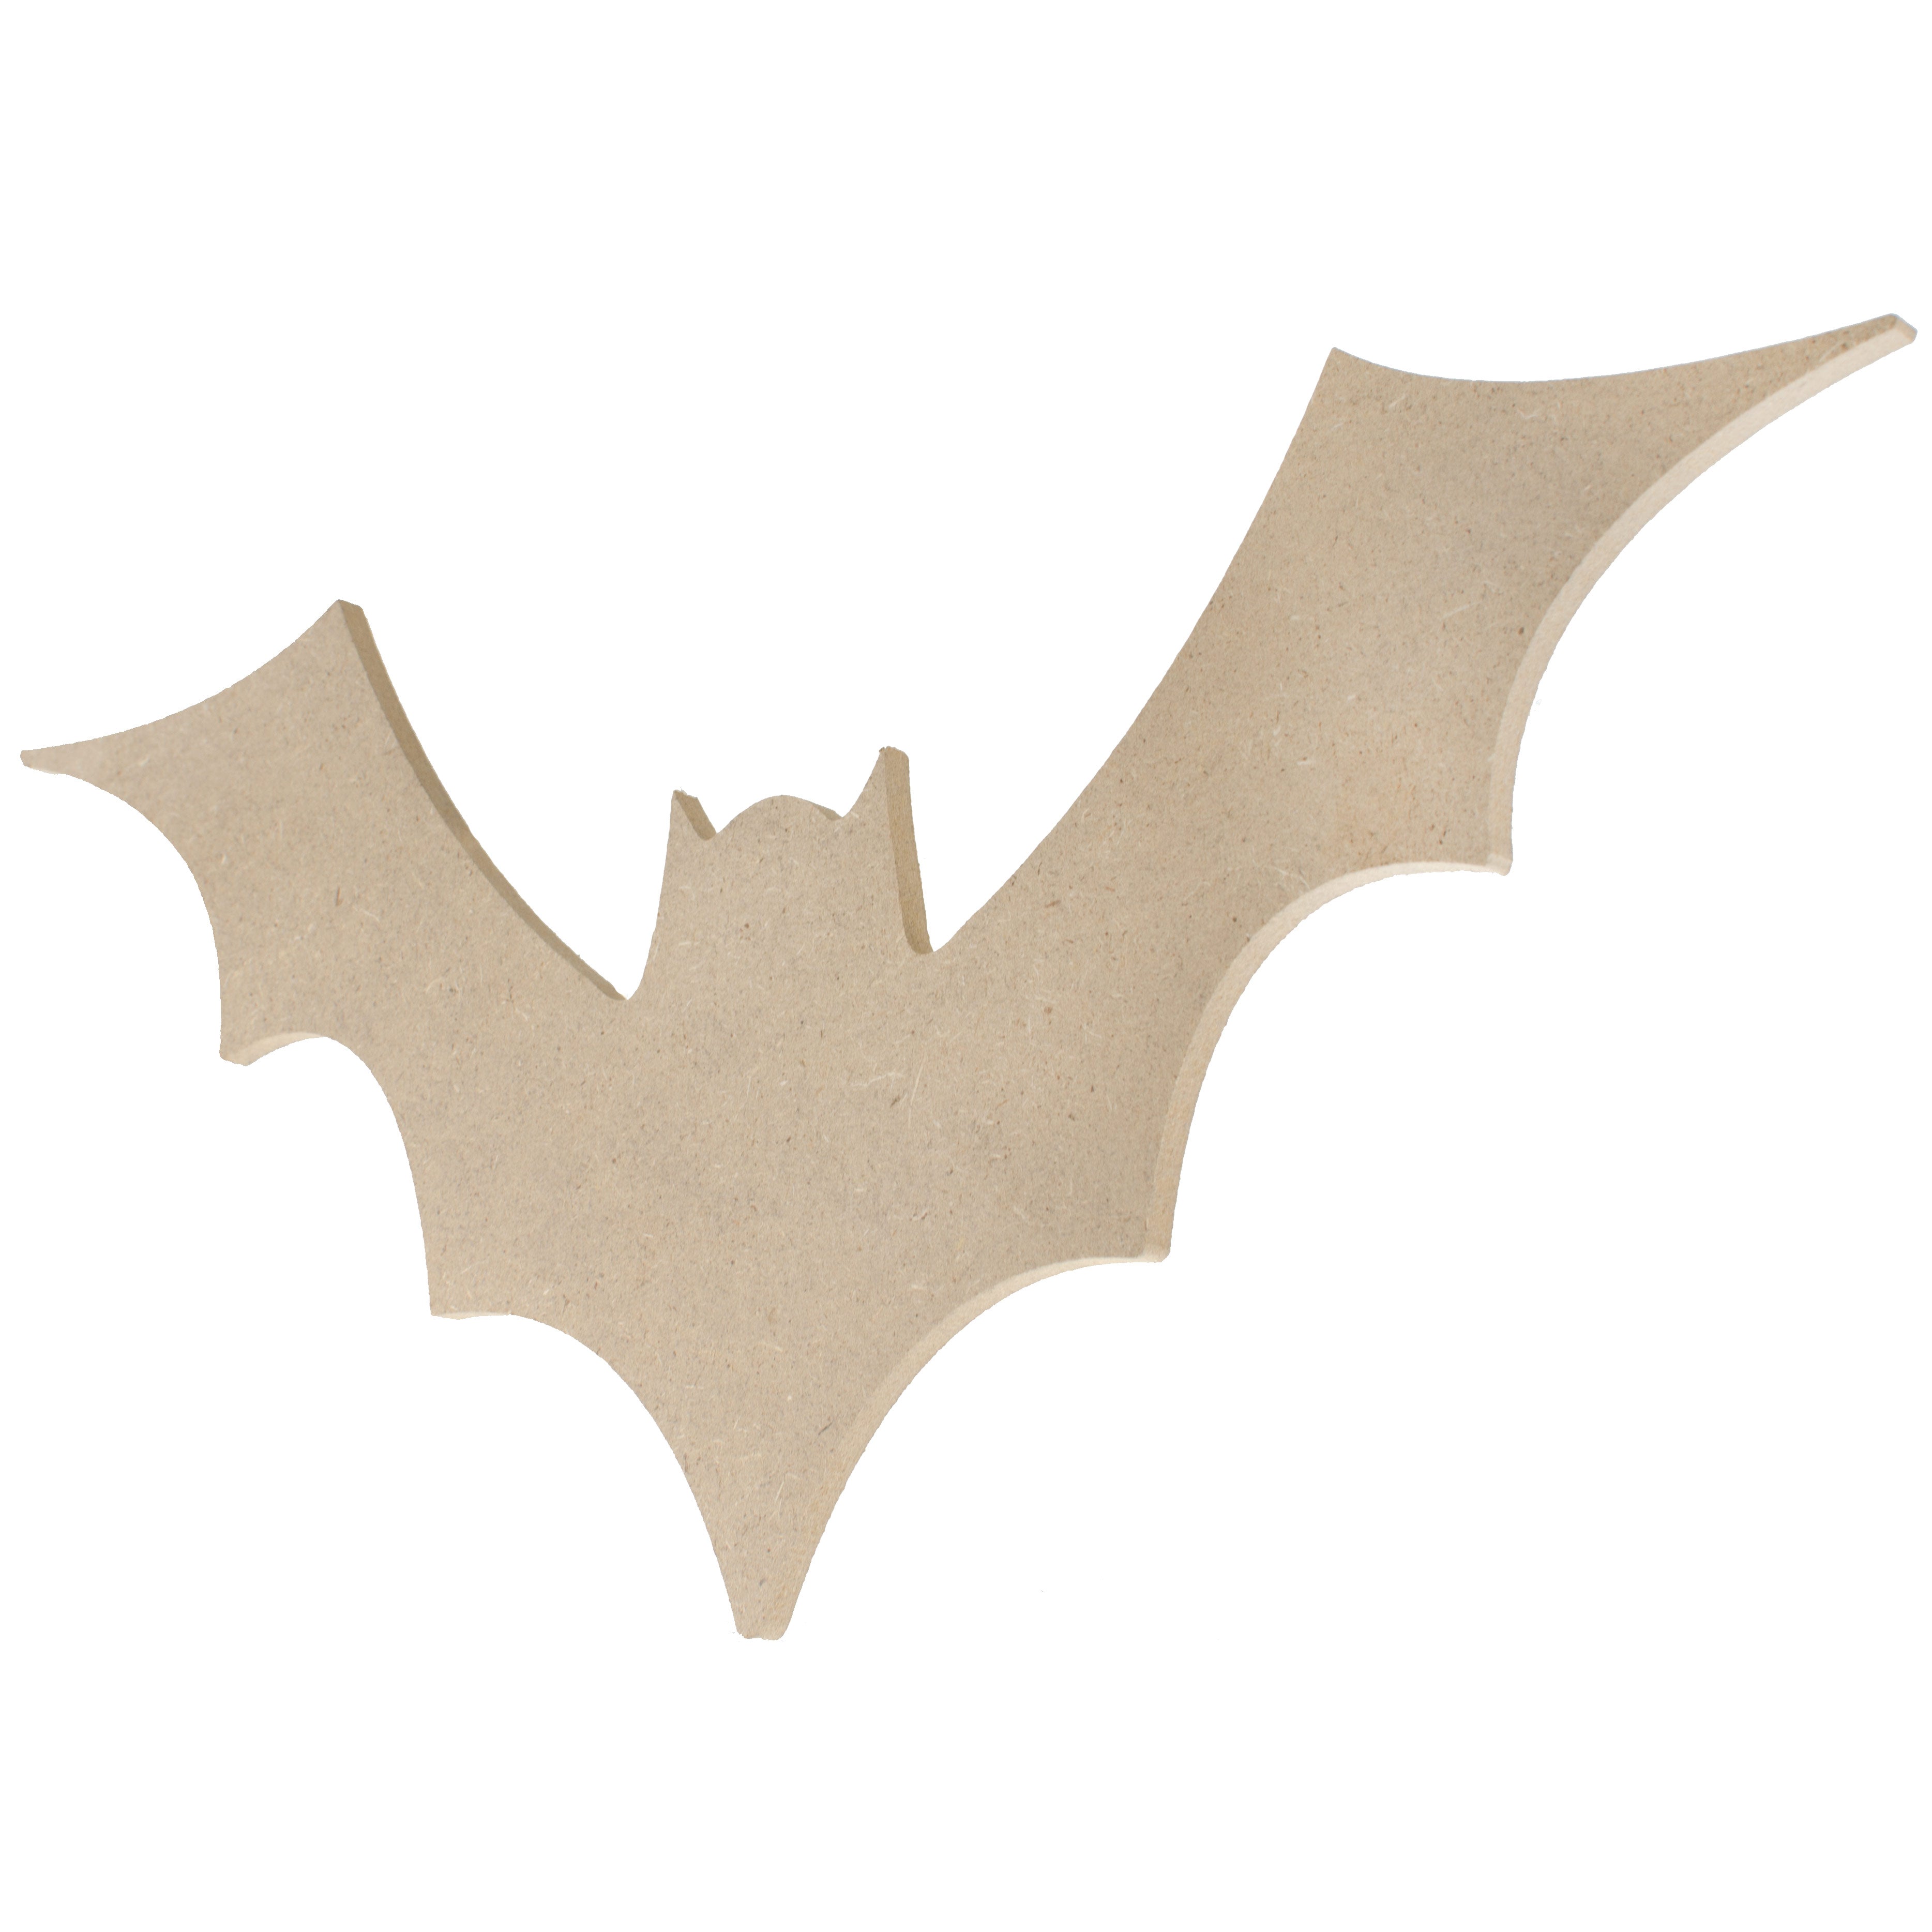 12" Decorative Wooden Bat Silhouette: Natural